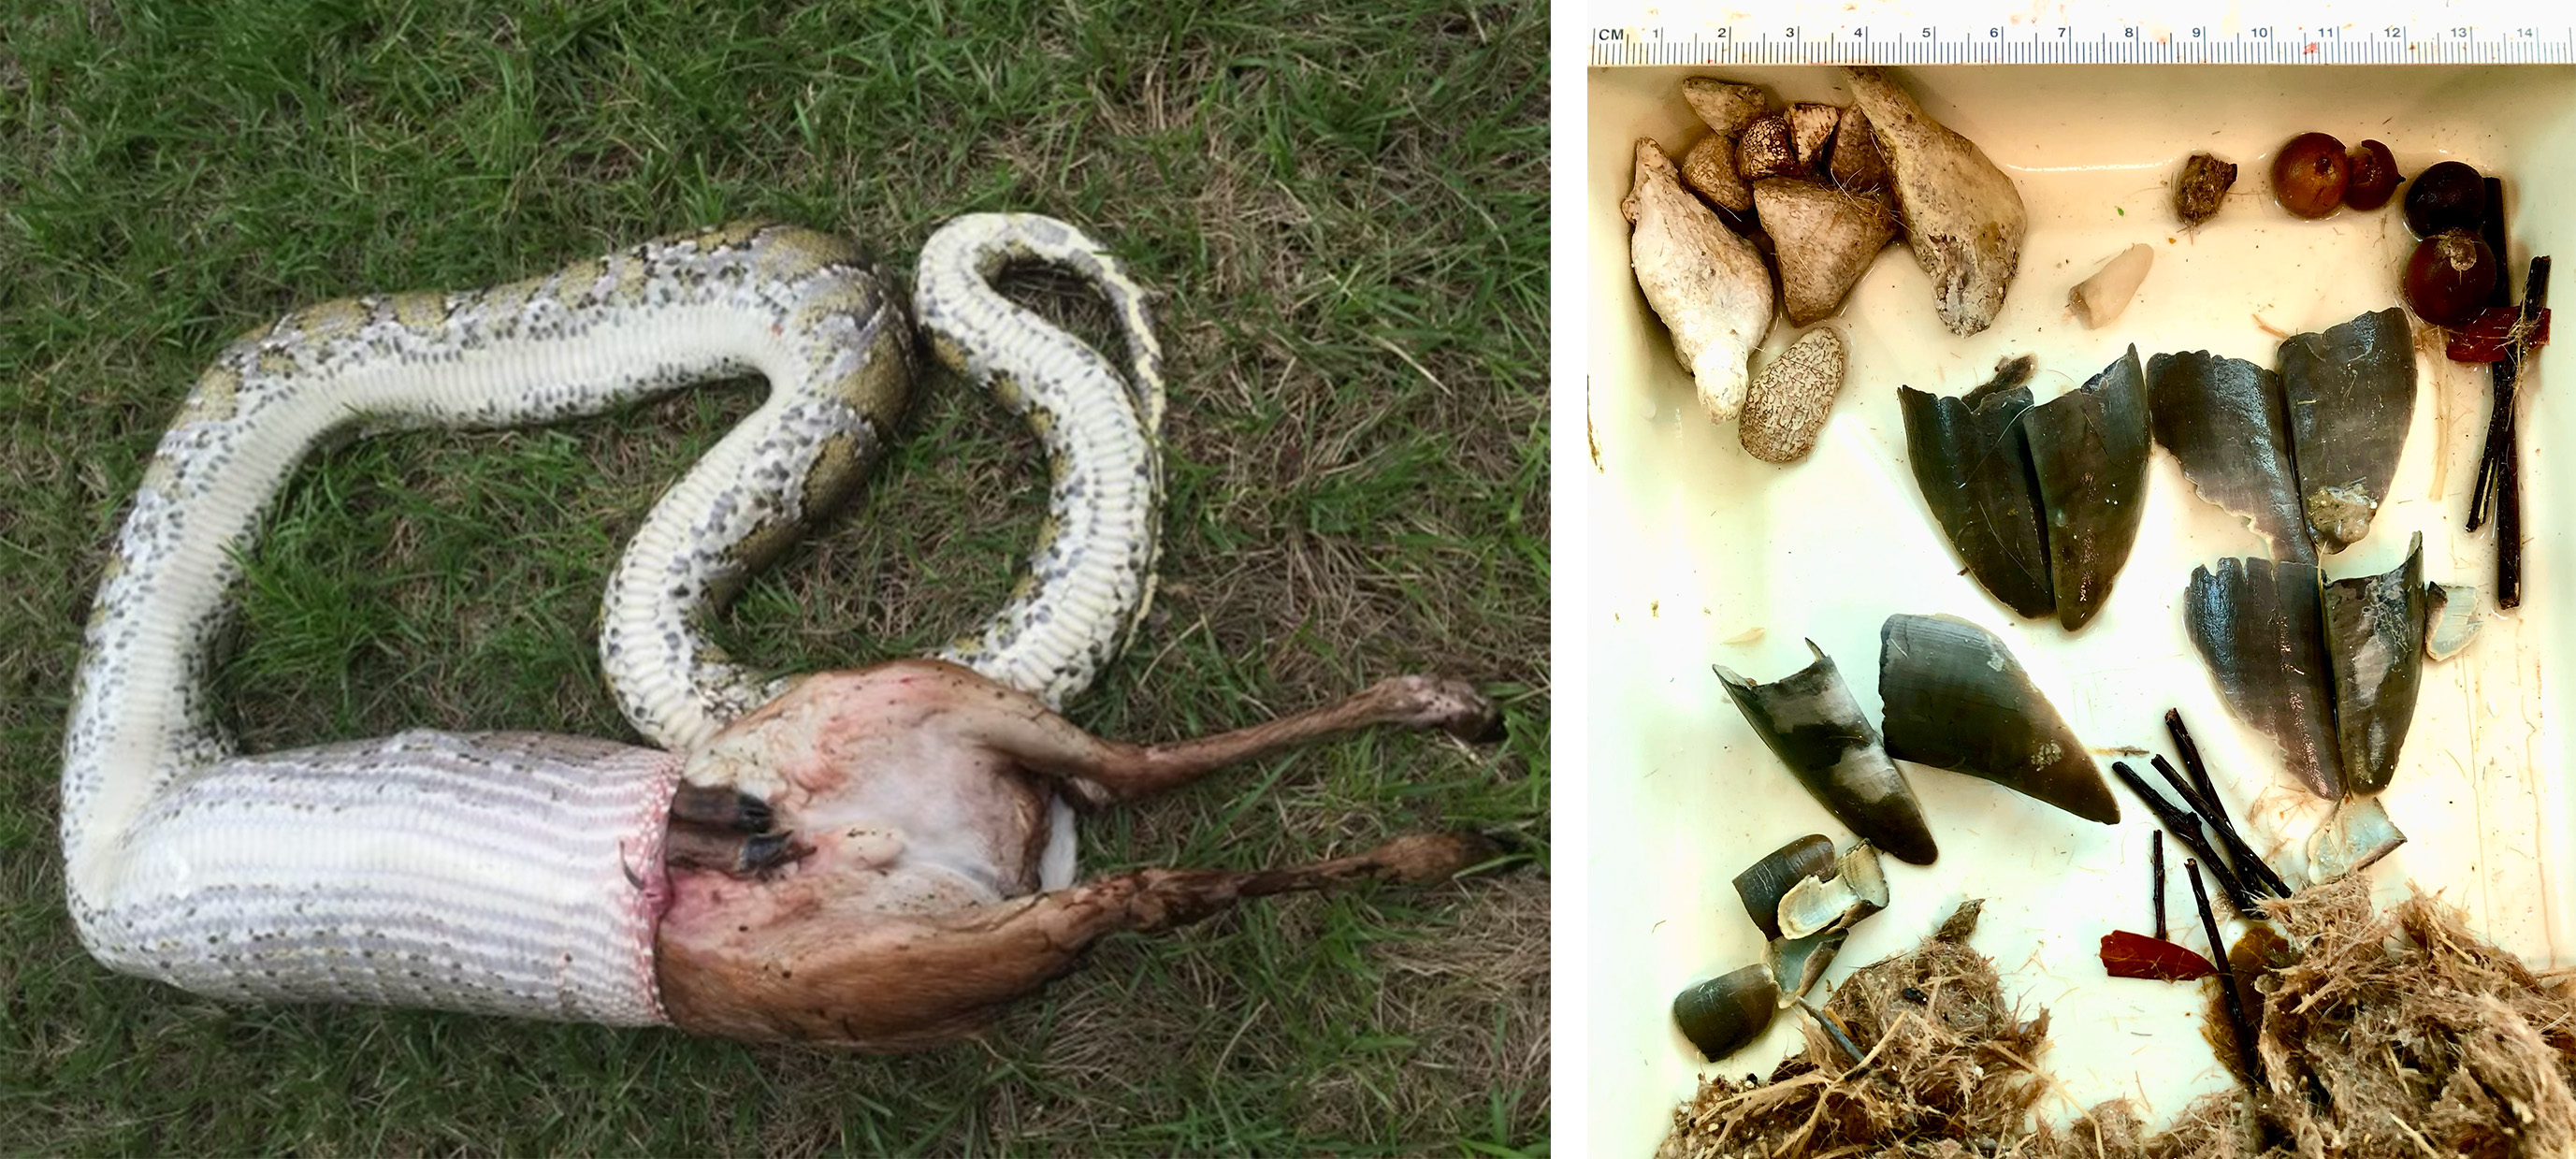 Necropsy photos of a deer-eating Burmese pythons.